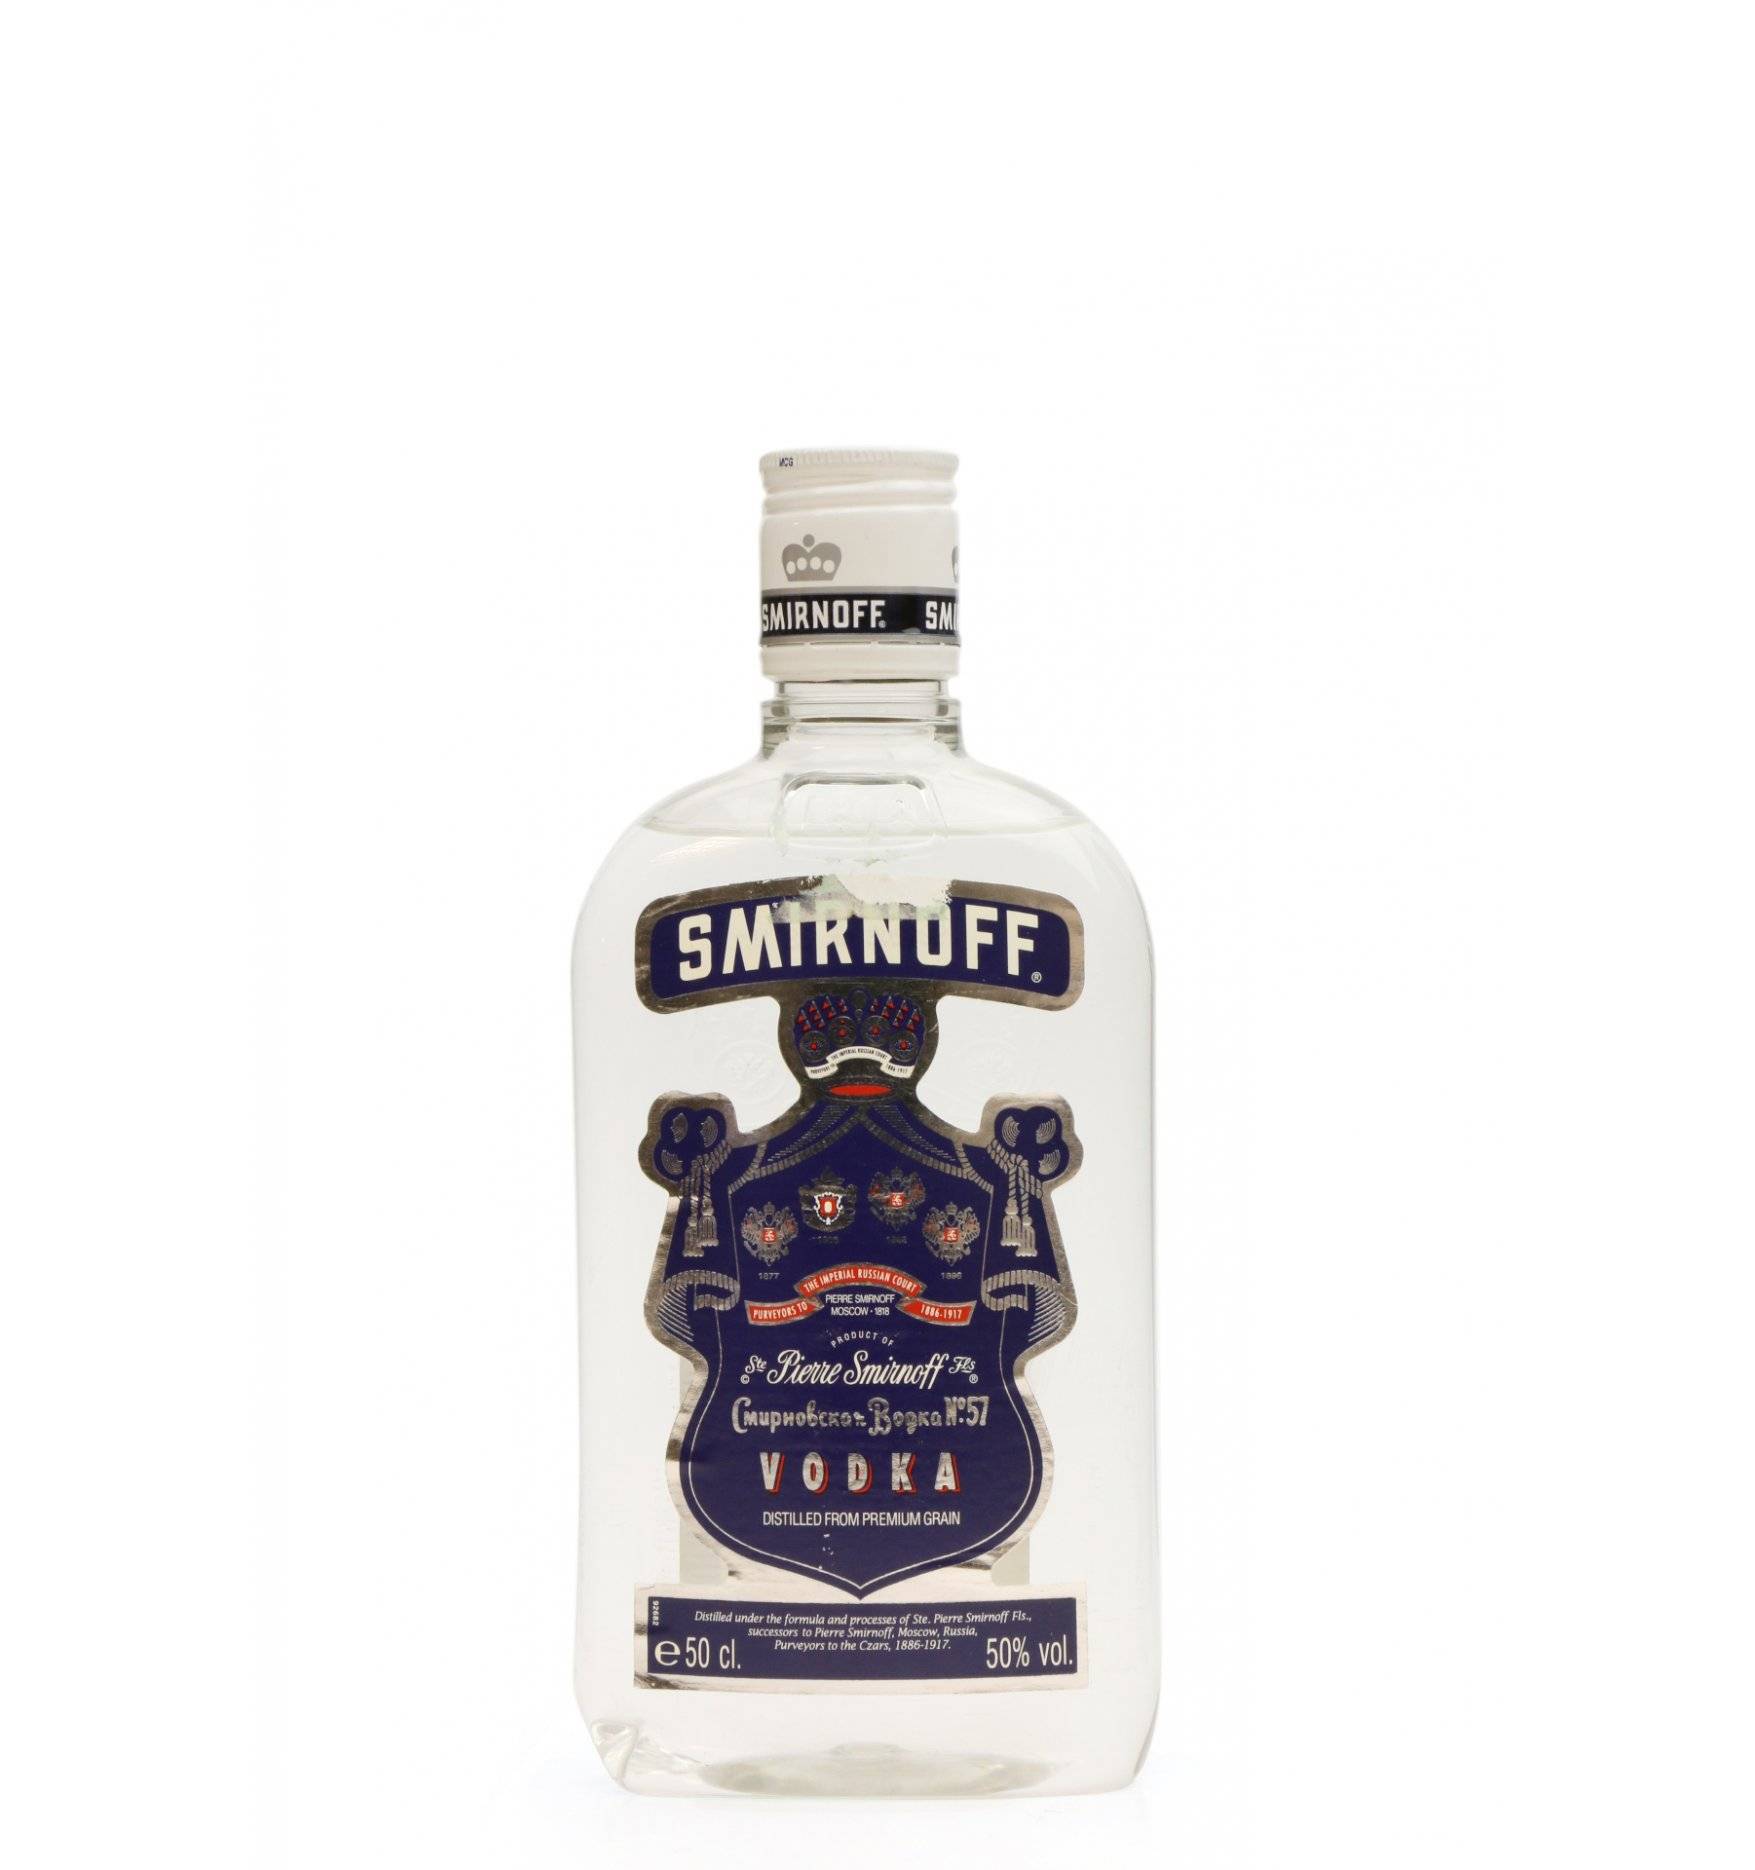 Smirnoff No. Auctions Whisky Just 57 (50cl) - Vodka